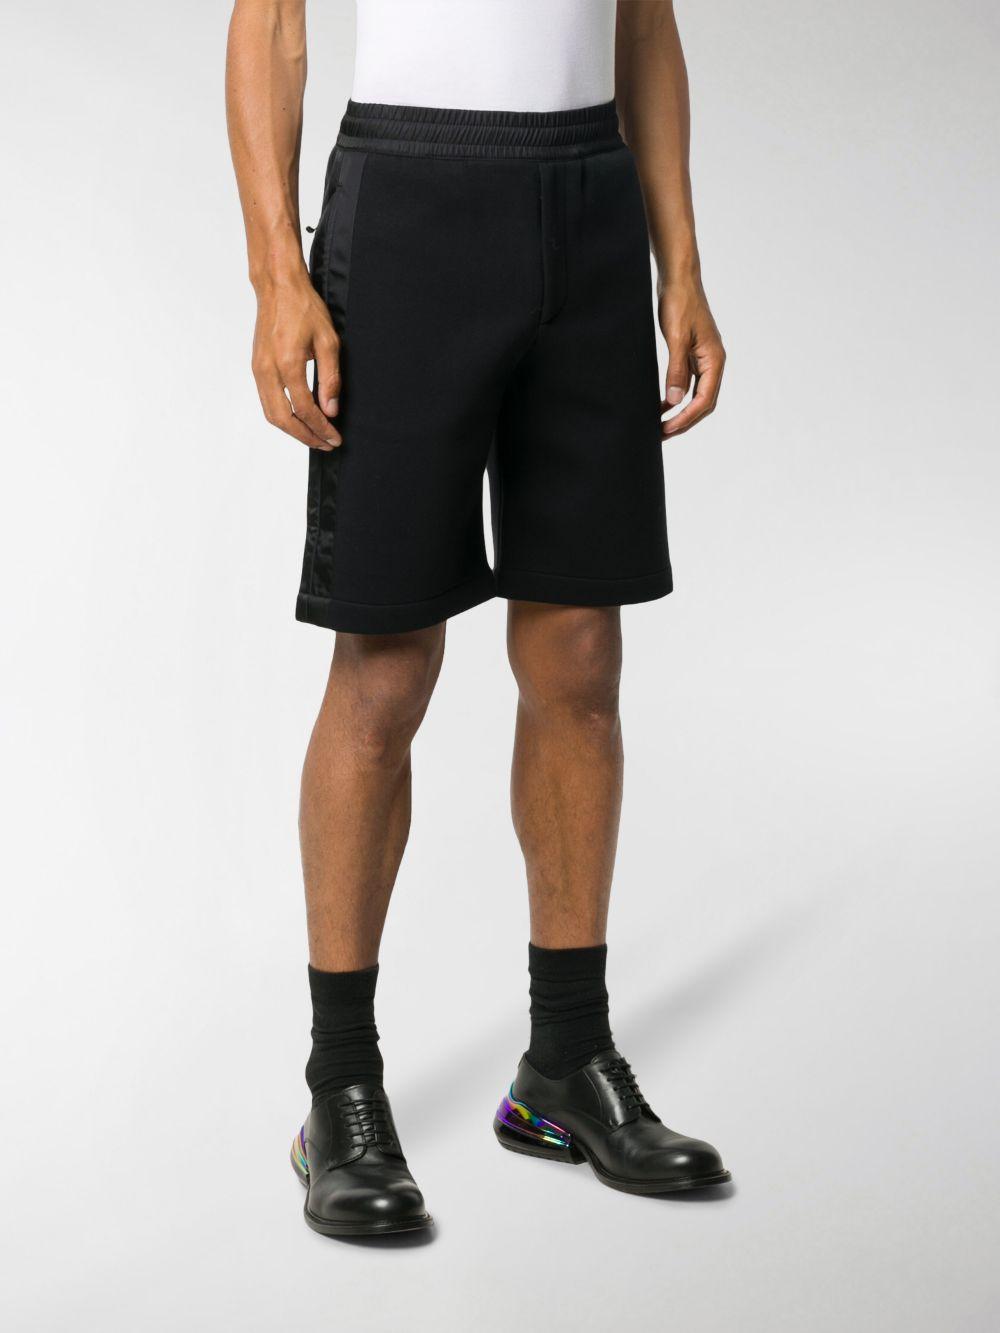 Alexander McQueen Cotton Hybrid Track Shorts in Black for Men - Lyst